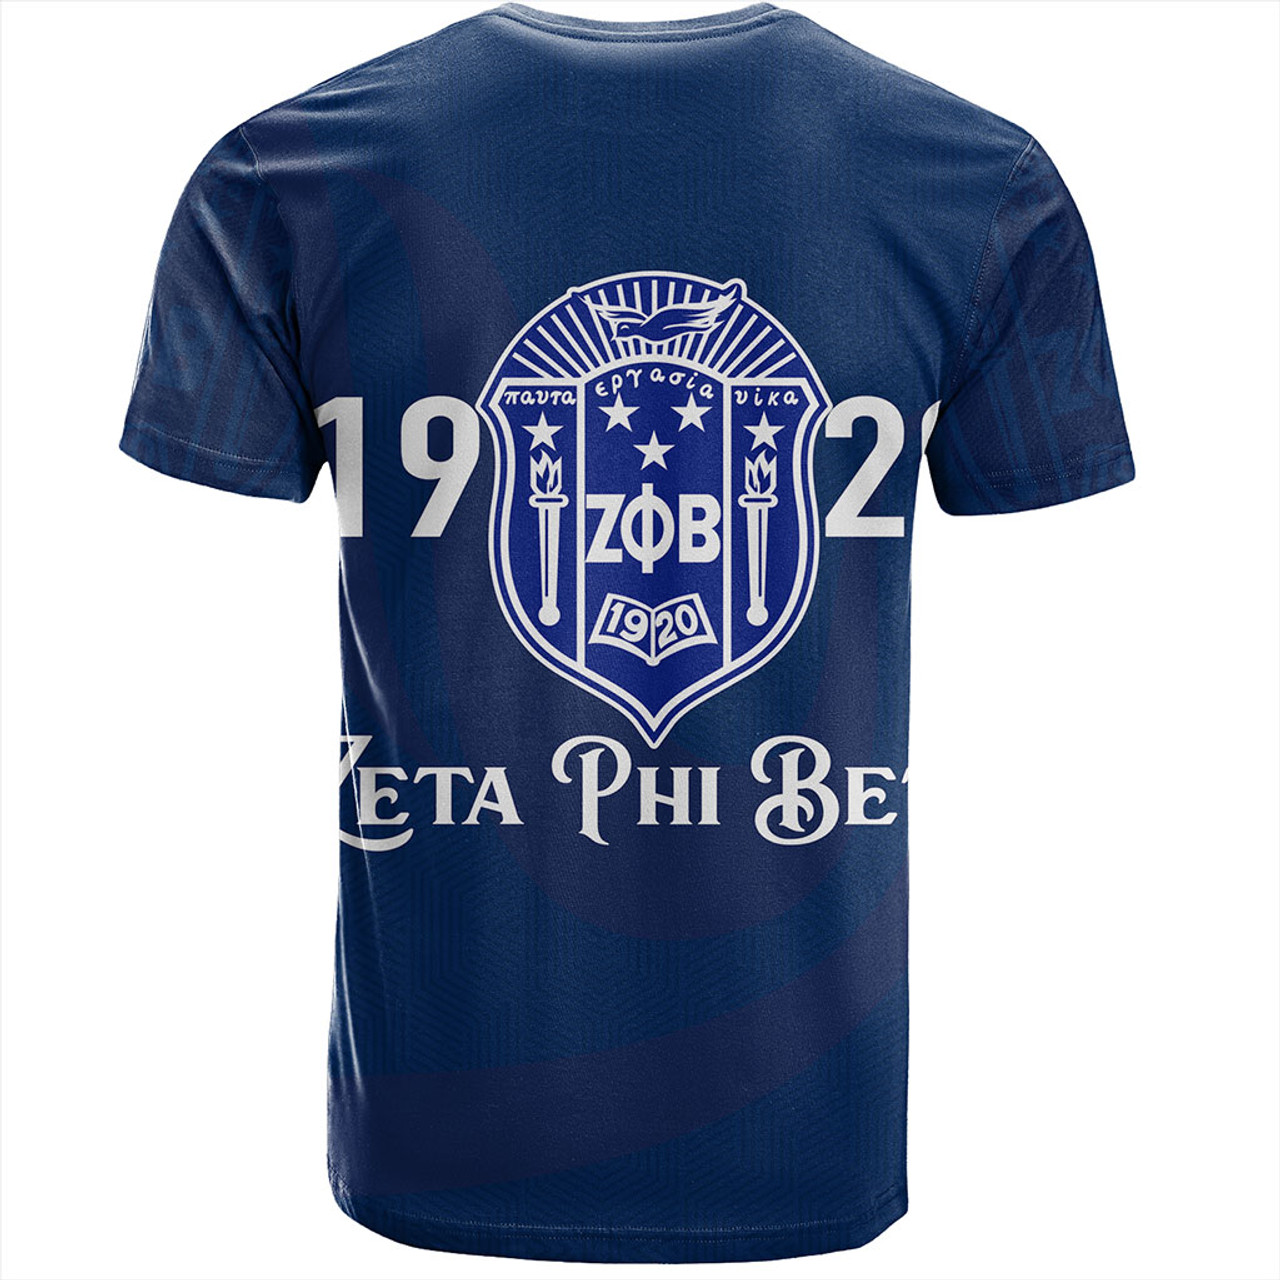 Zeta Phi Beta T-Shirt Finer Sorority